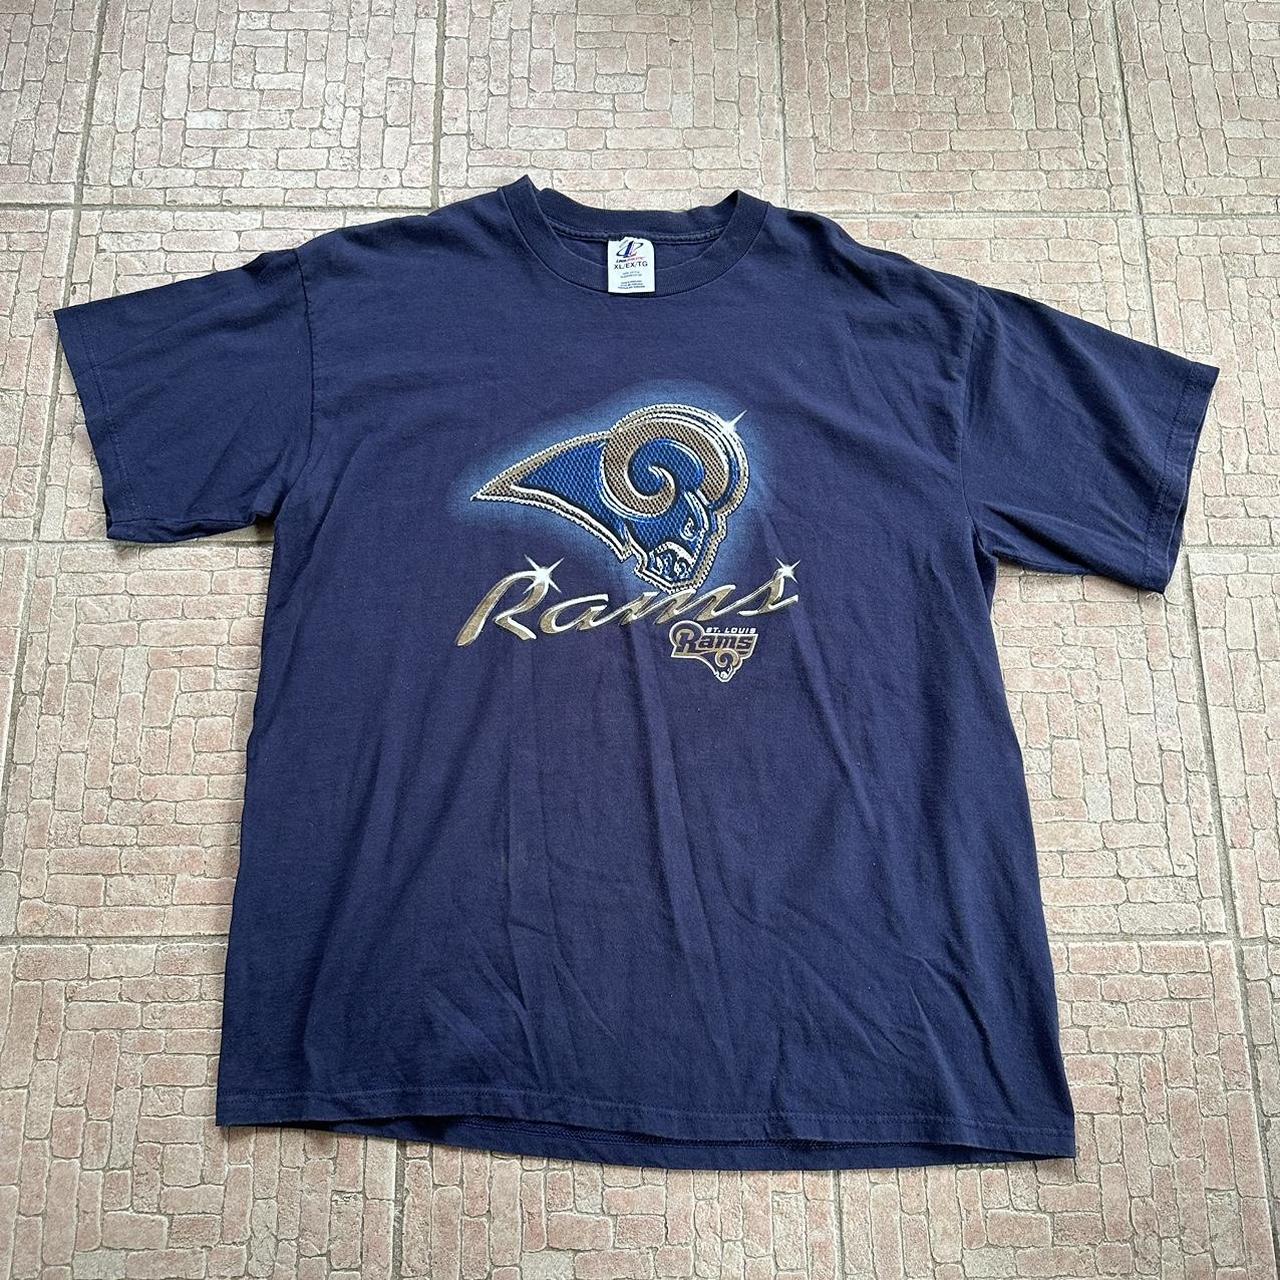 Rams tshirt LA Rams vintage style tshirt. Great - Depop